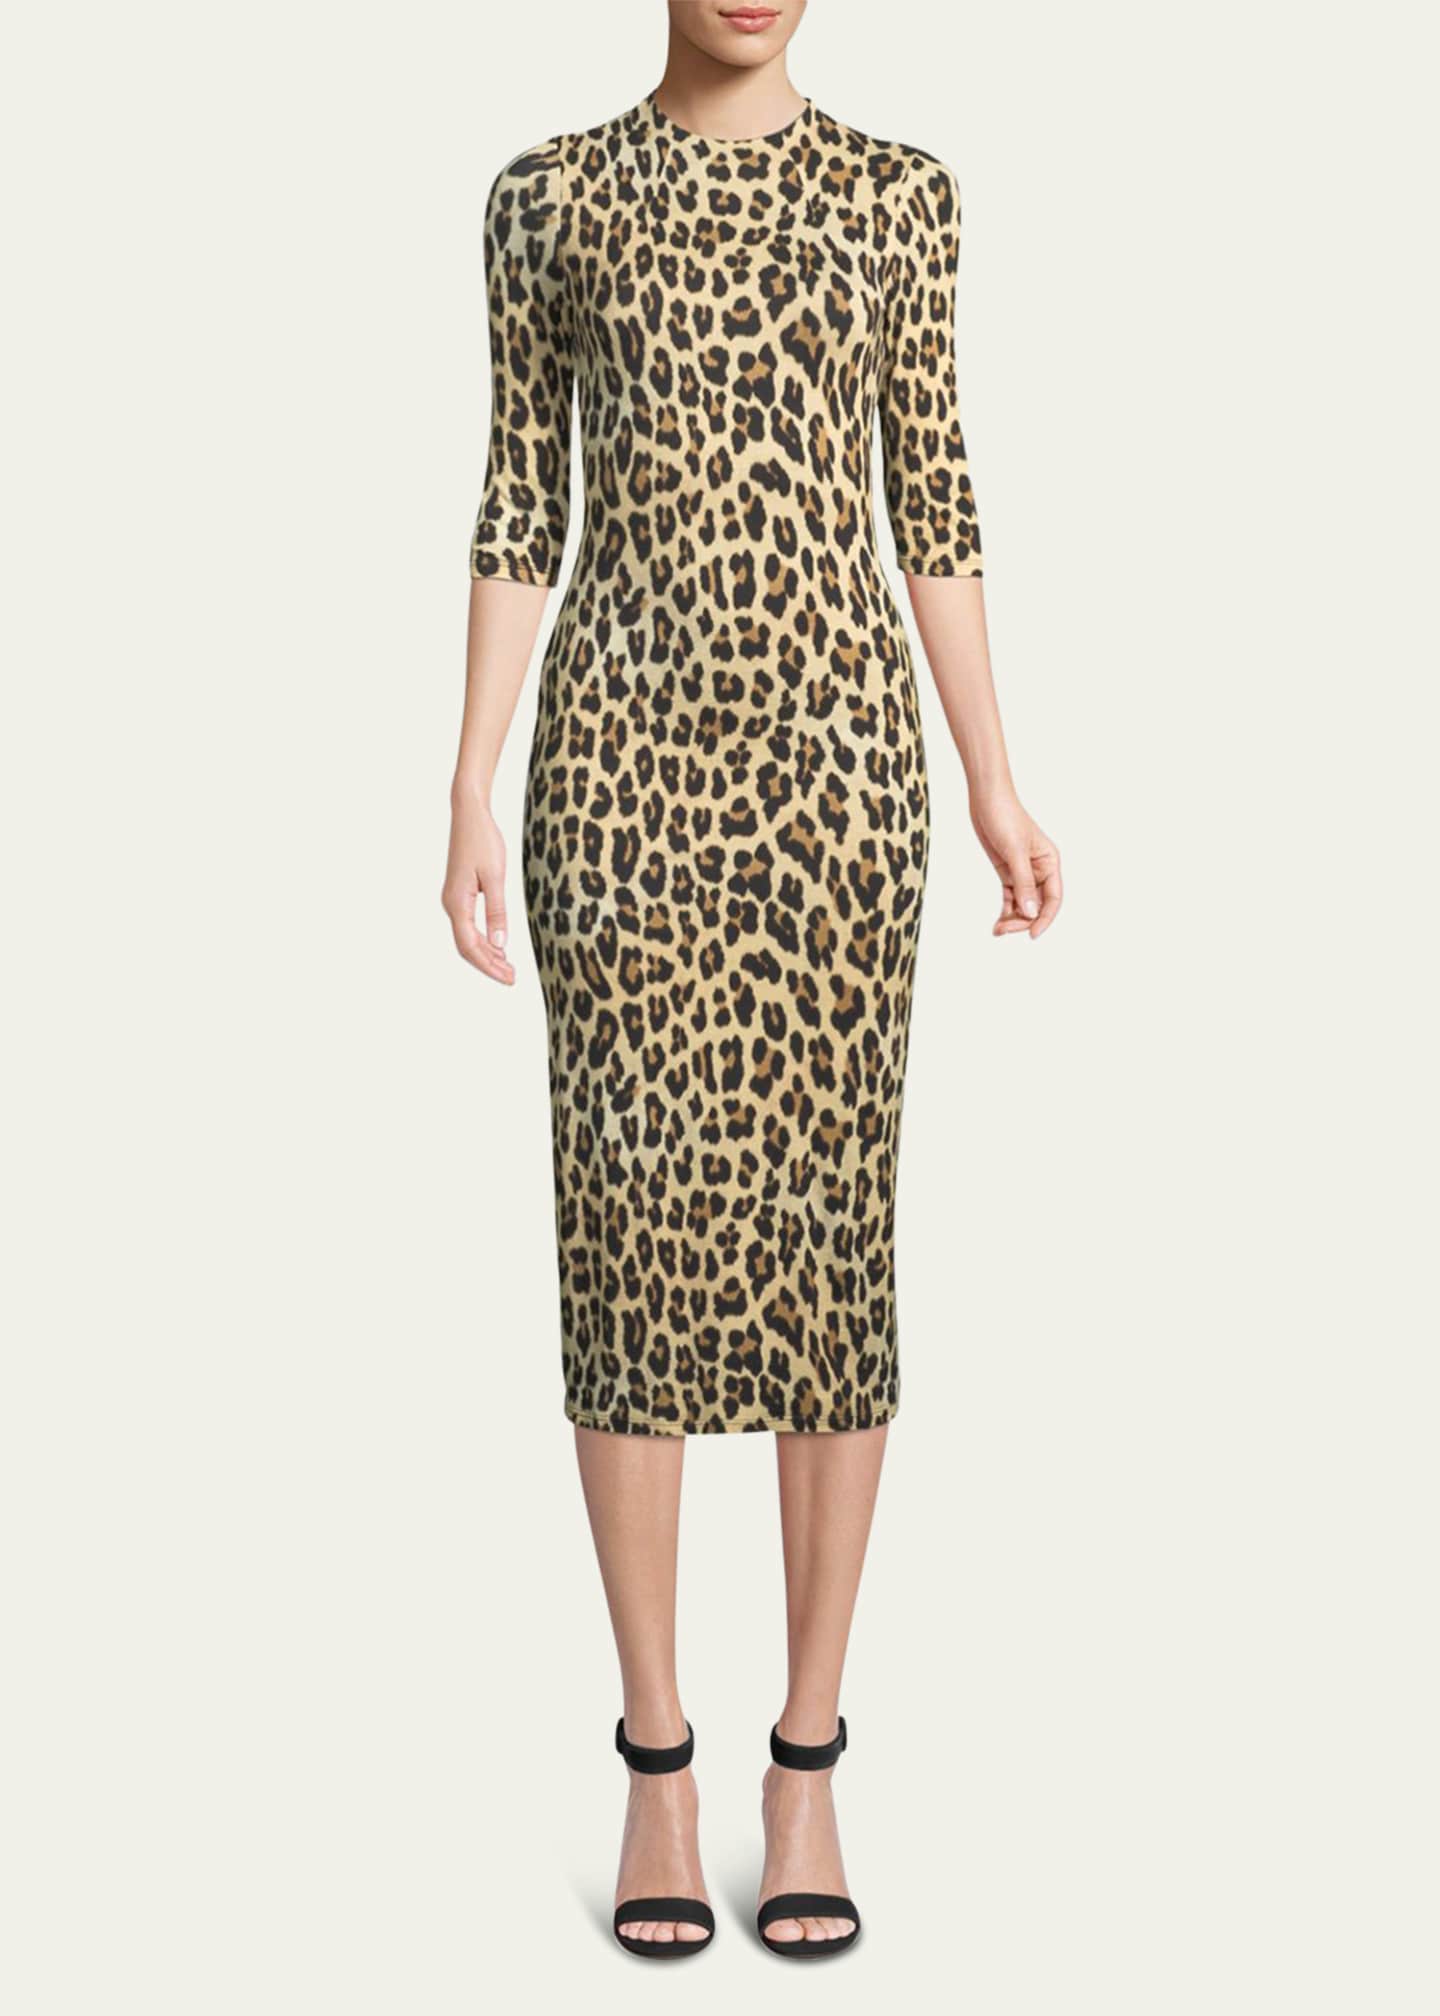 Alice + Olivia Delora Fitted Leopard Mock-Neck Dress - Bergdorf Goodman